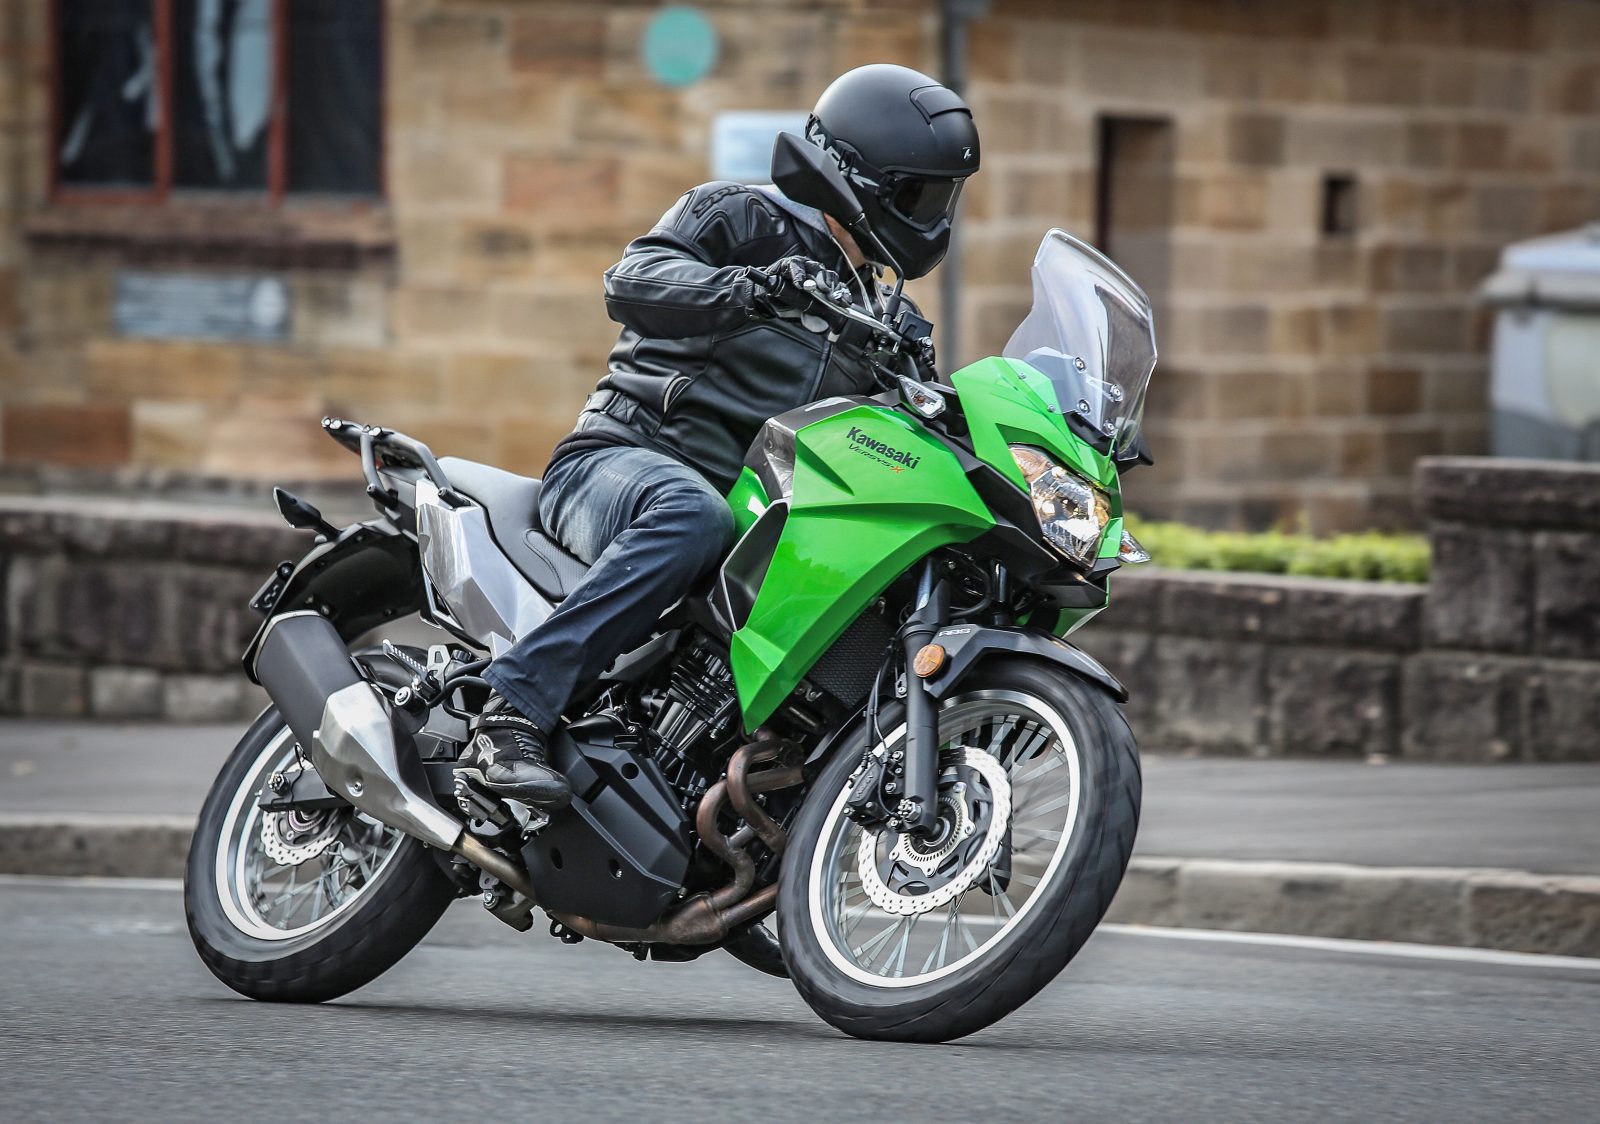 KAWASAKI VERSYS-X 300 - Australian Motorcycle News